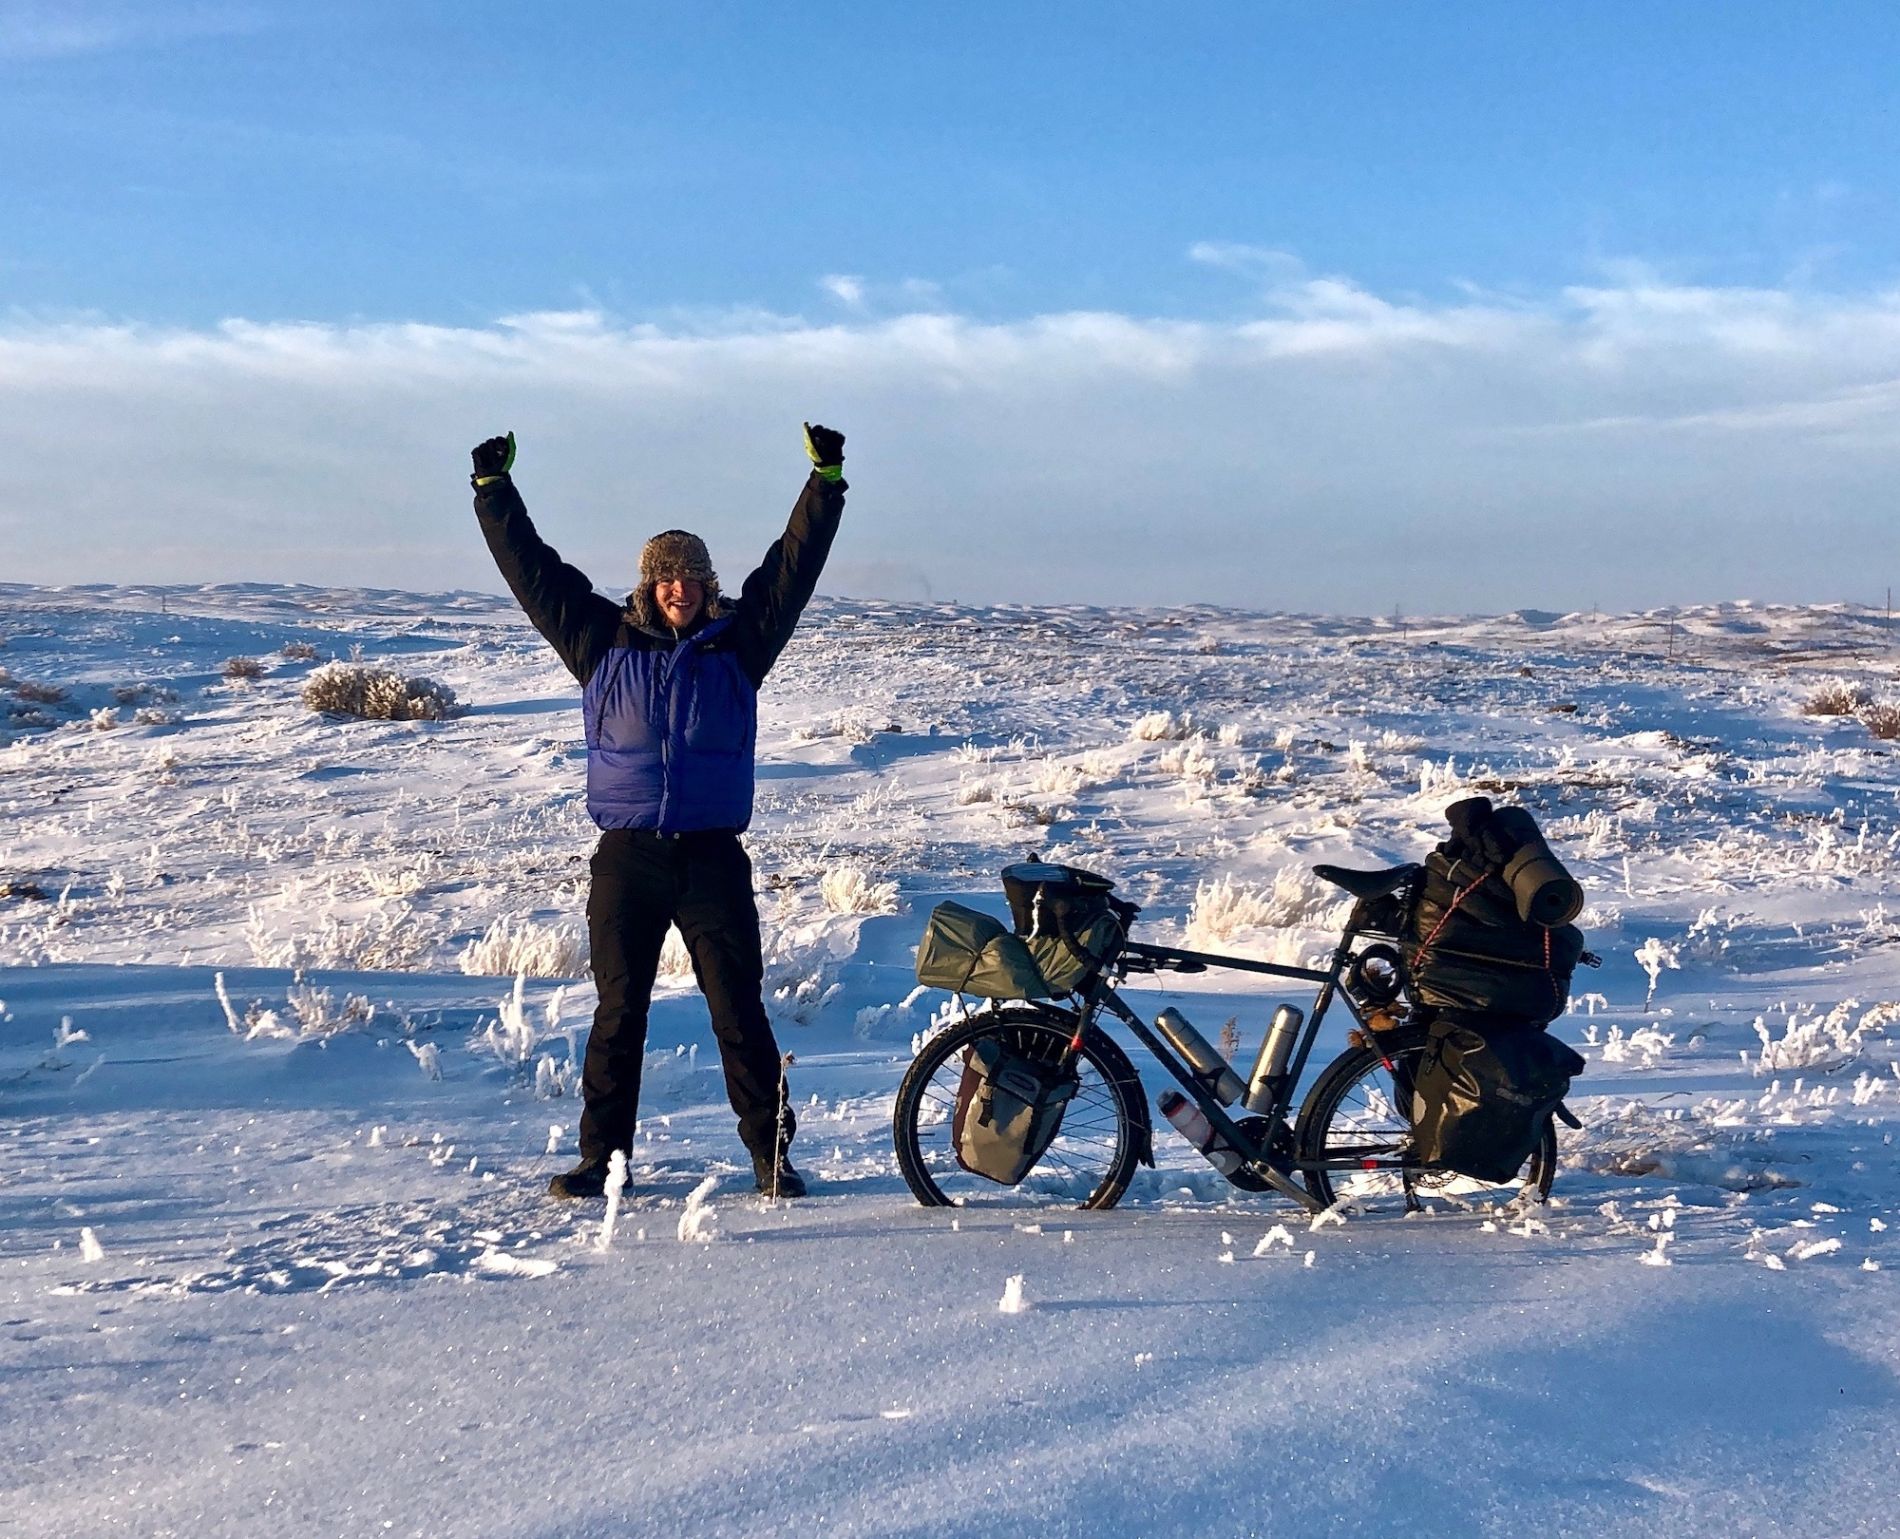 Geordie Stewart posing with his bike in the snowy landscape of Kazakhstan in winter